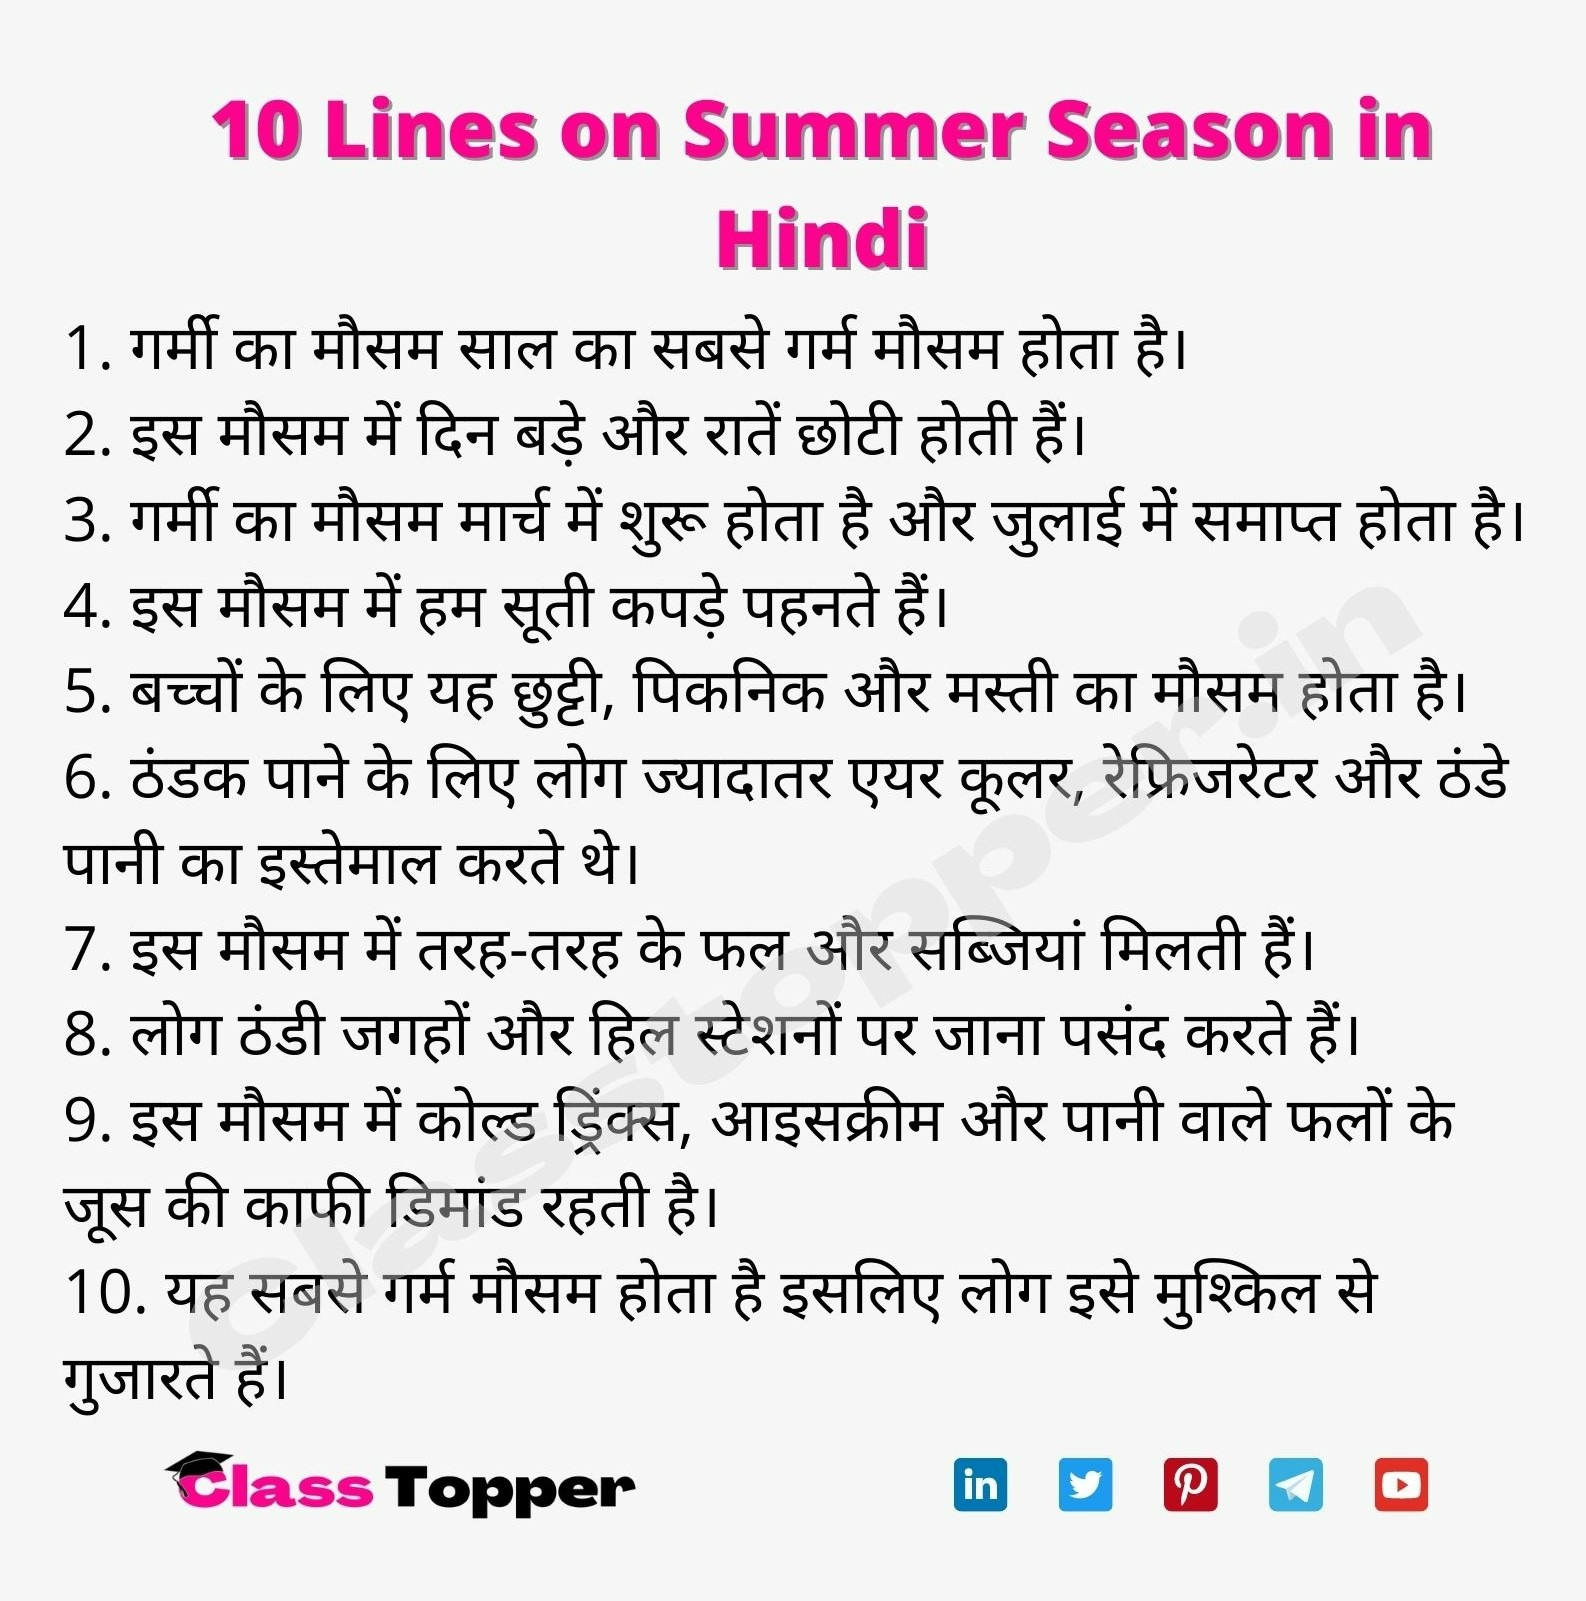 essay on summer season in hindi for class 6